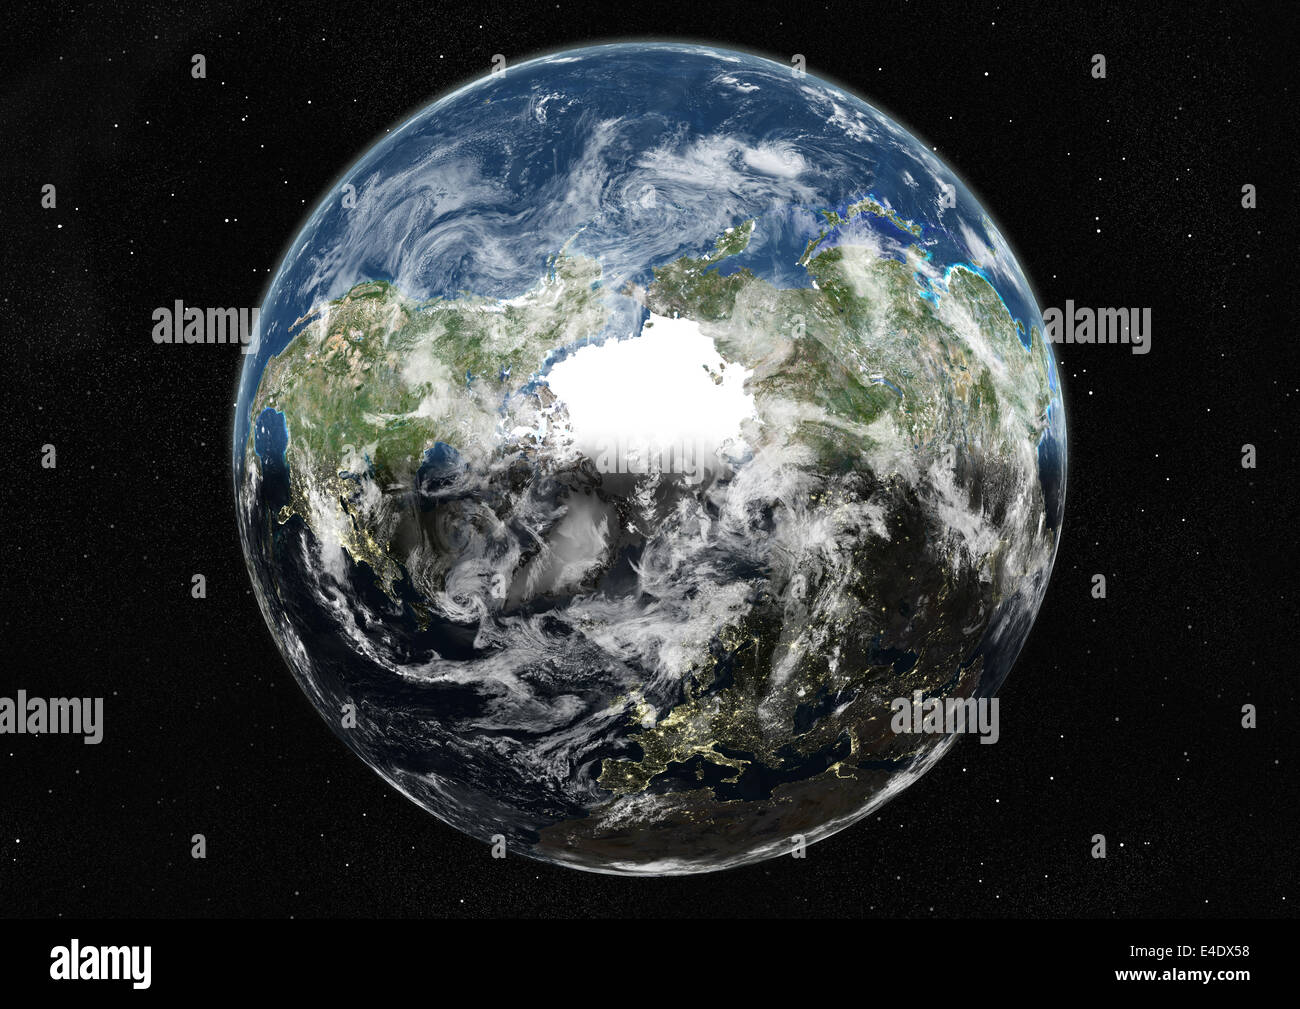 Globus den Nordpol, Echtfarben-Satellitenbild im Echtfarben-Satellitenbild der Erde am Nordpol zentriert Stockfotografie - Alamy